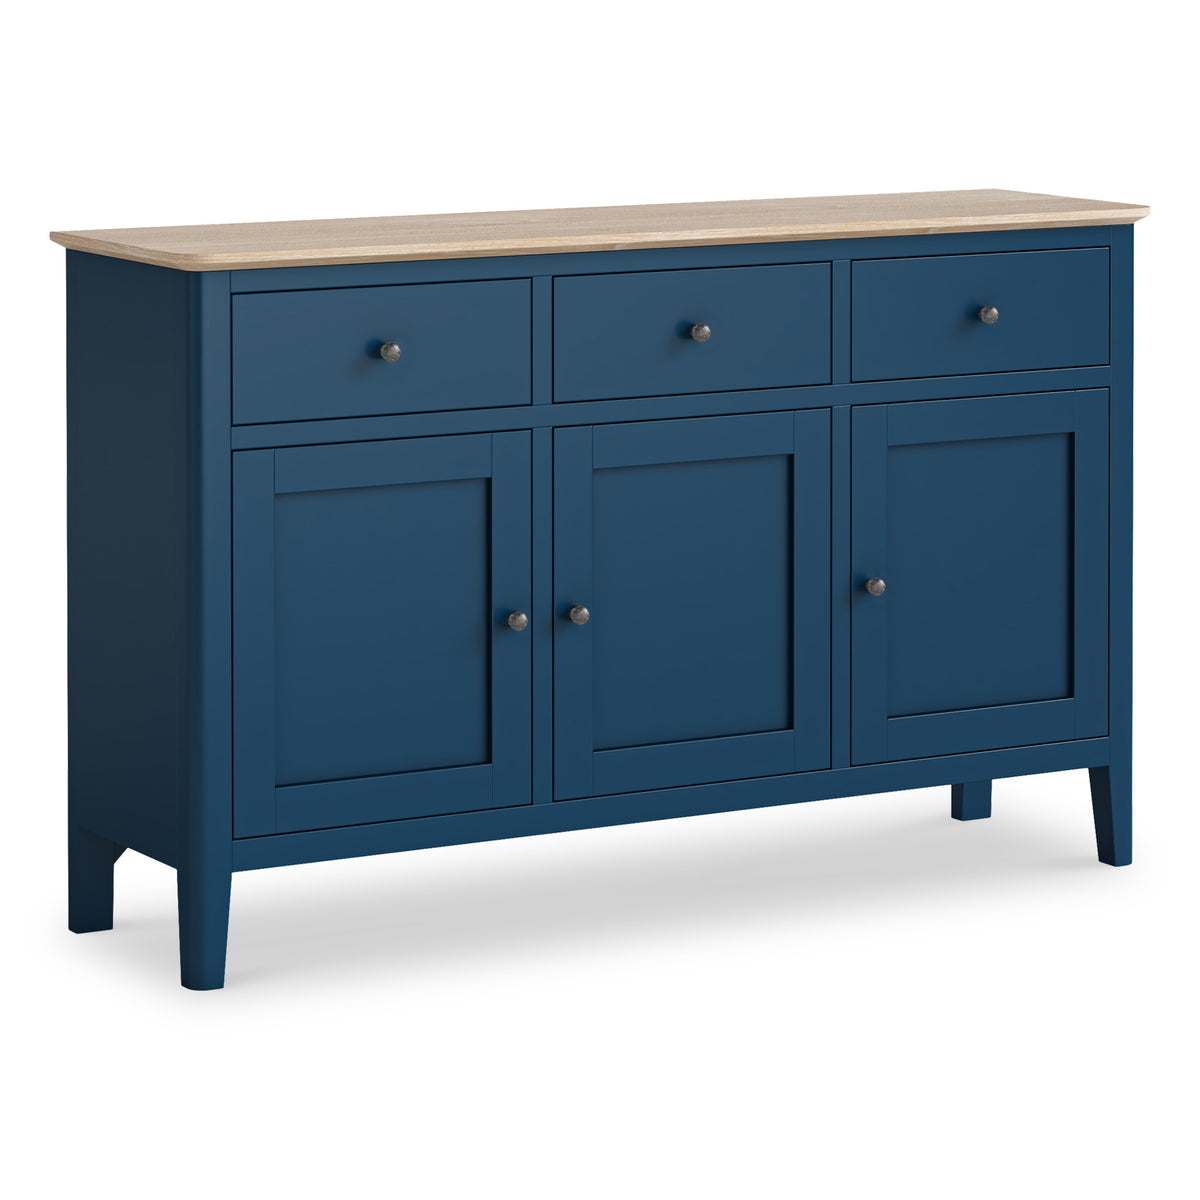 Penrose Navy Blue Large Sideboard with metal handles from Roseland Furniture